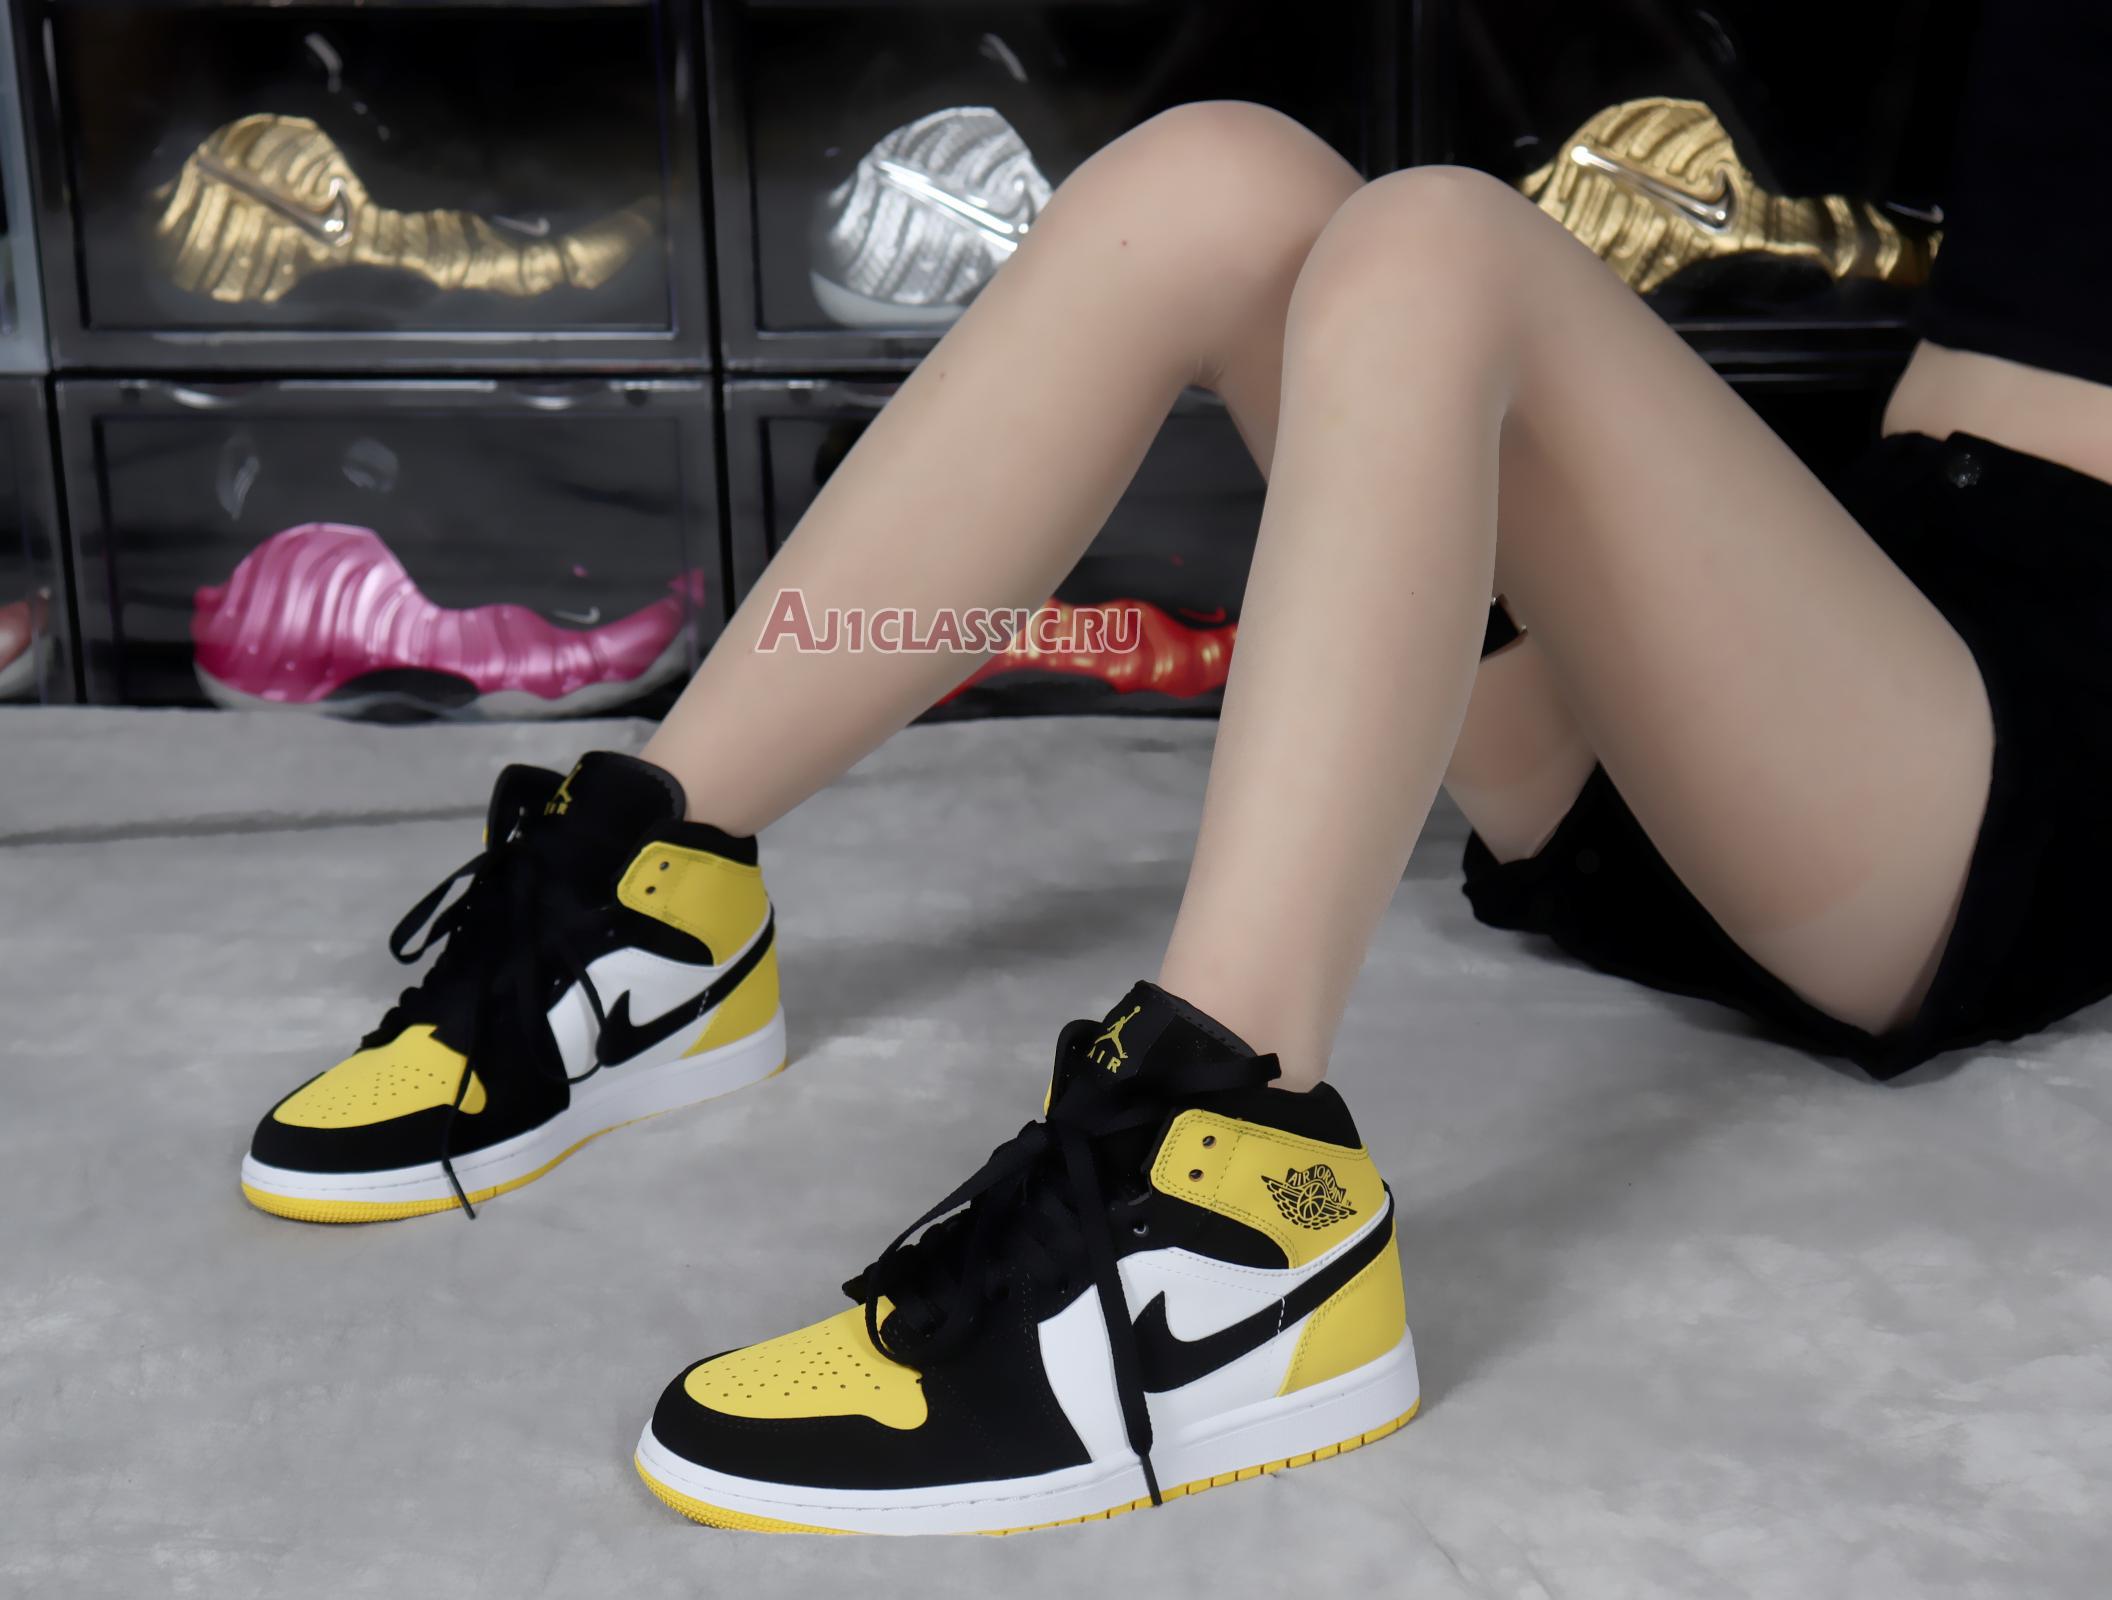 Air Jordan 1 Mid SE Yellow Toe 852542-071 Black/Black-Tour Yellow-White Sneakers